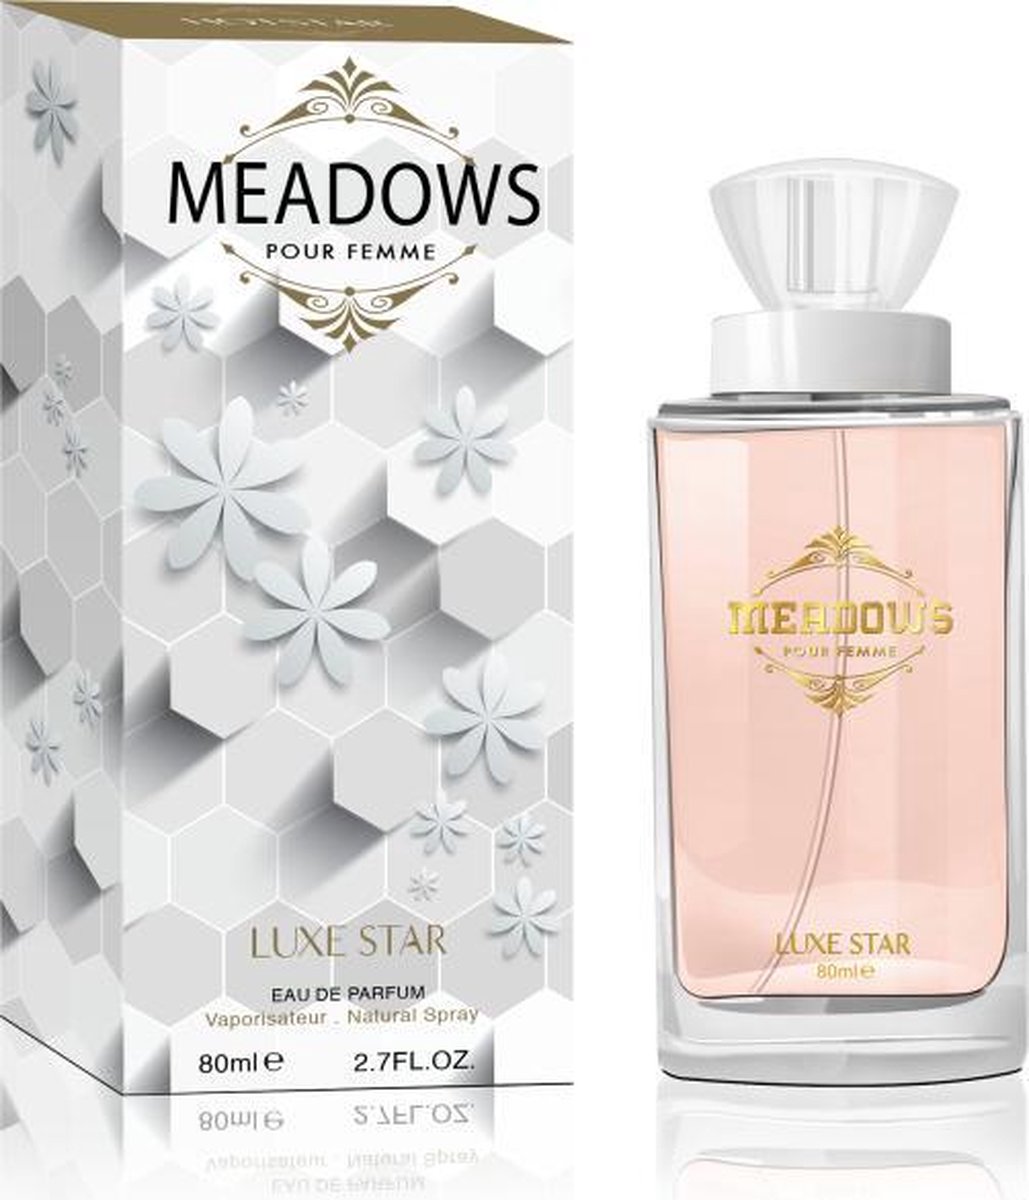 Meadows eau de parfum Luxe Star